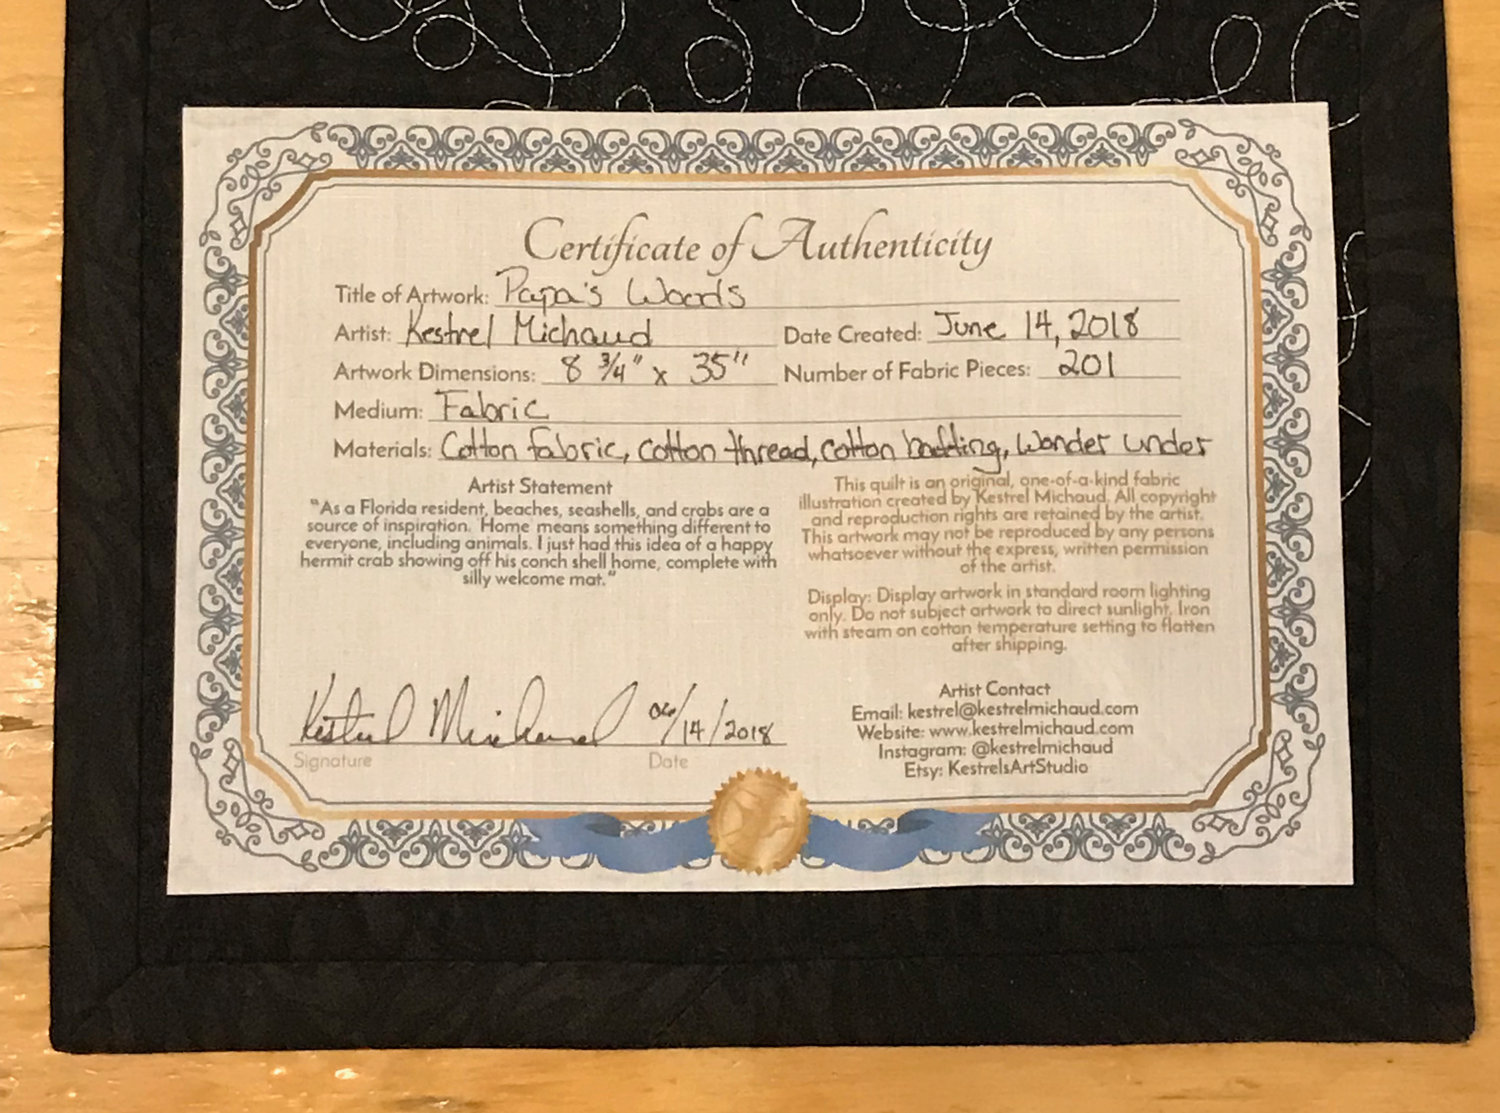 Certificates of Authenticity